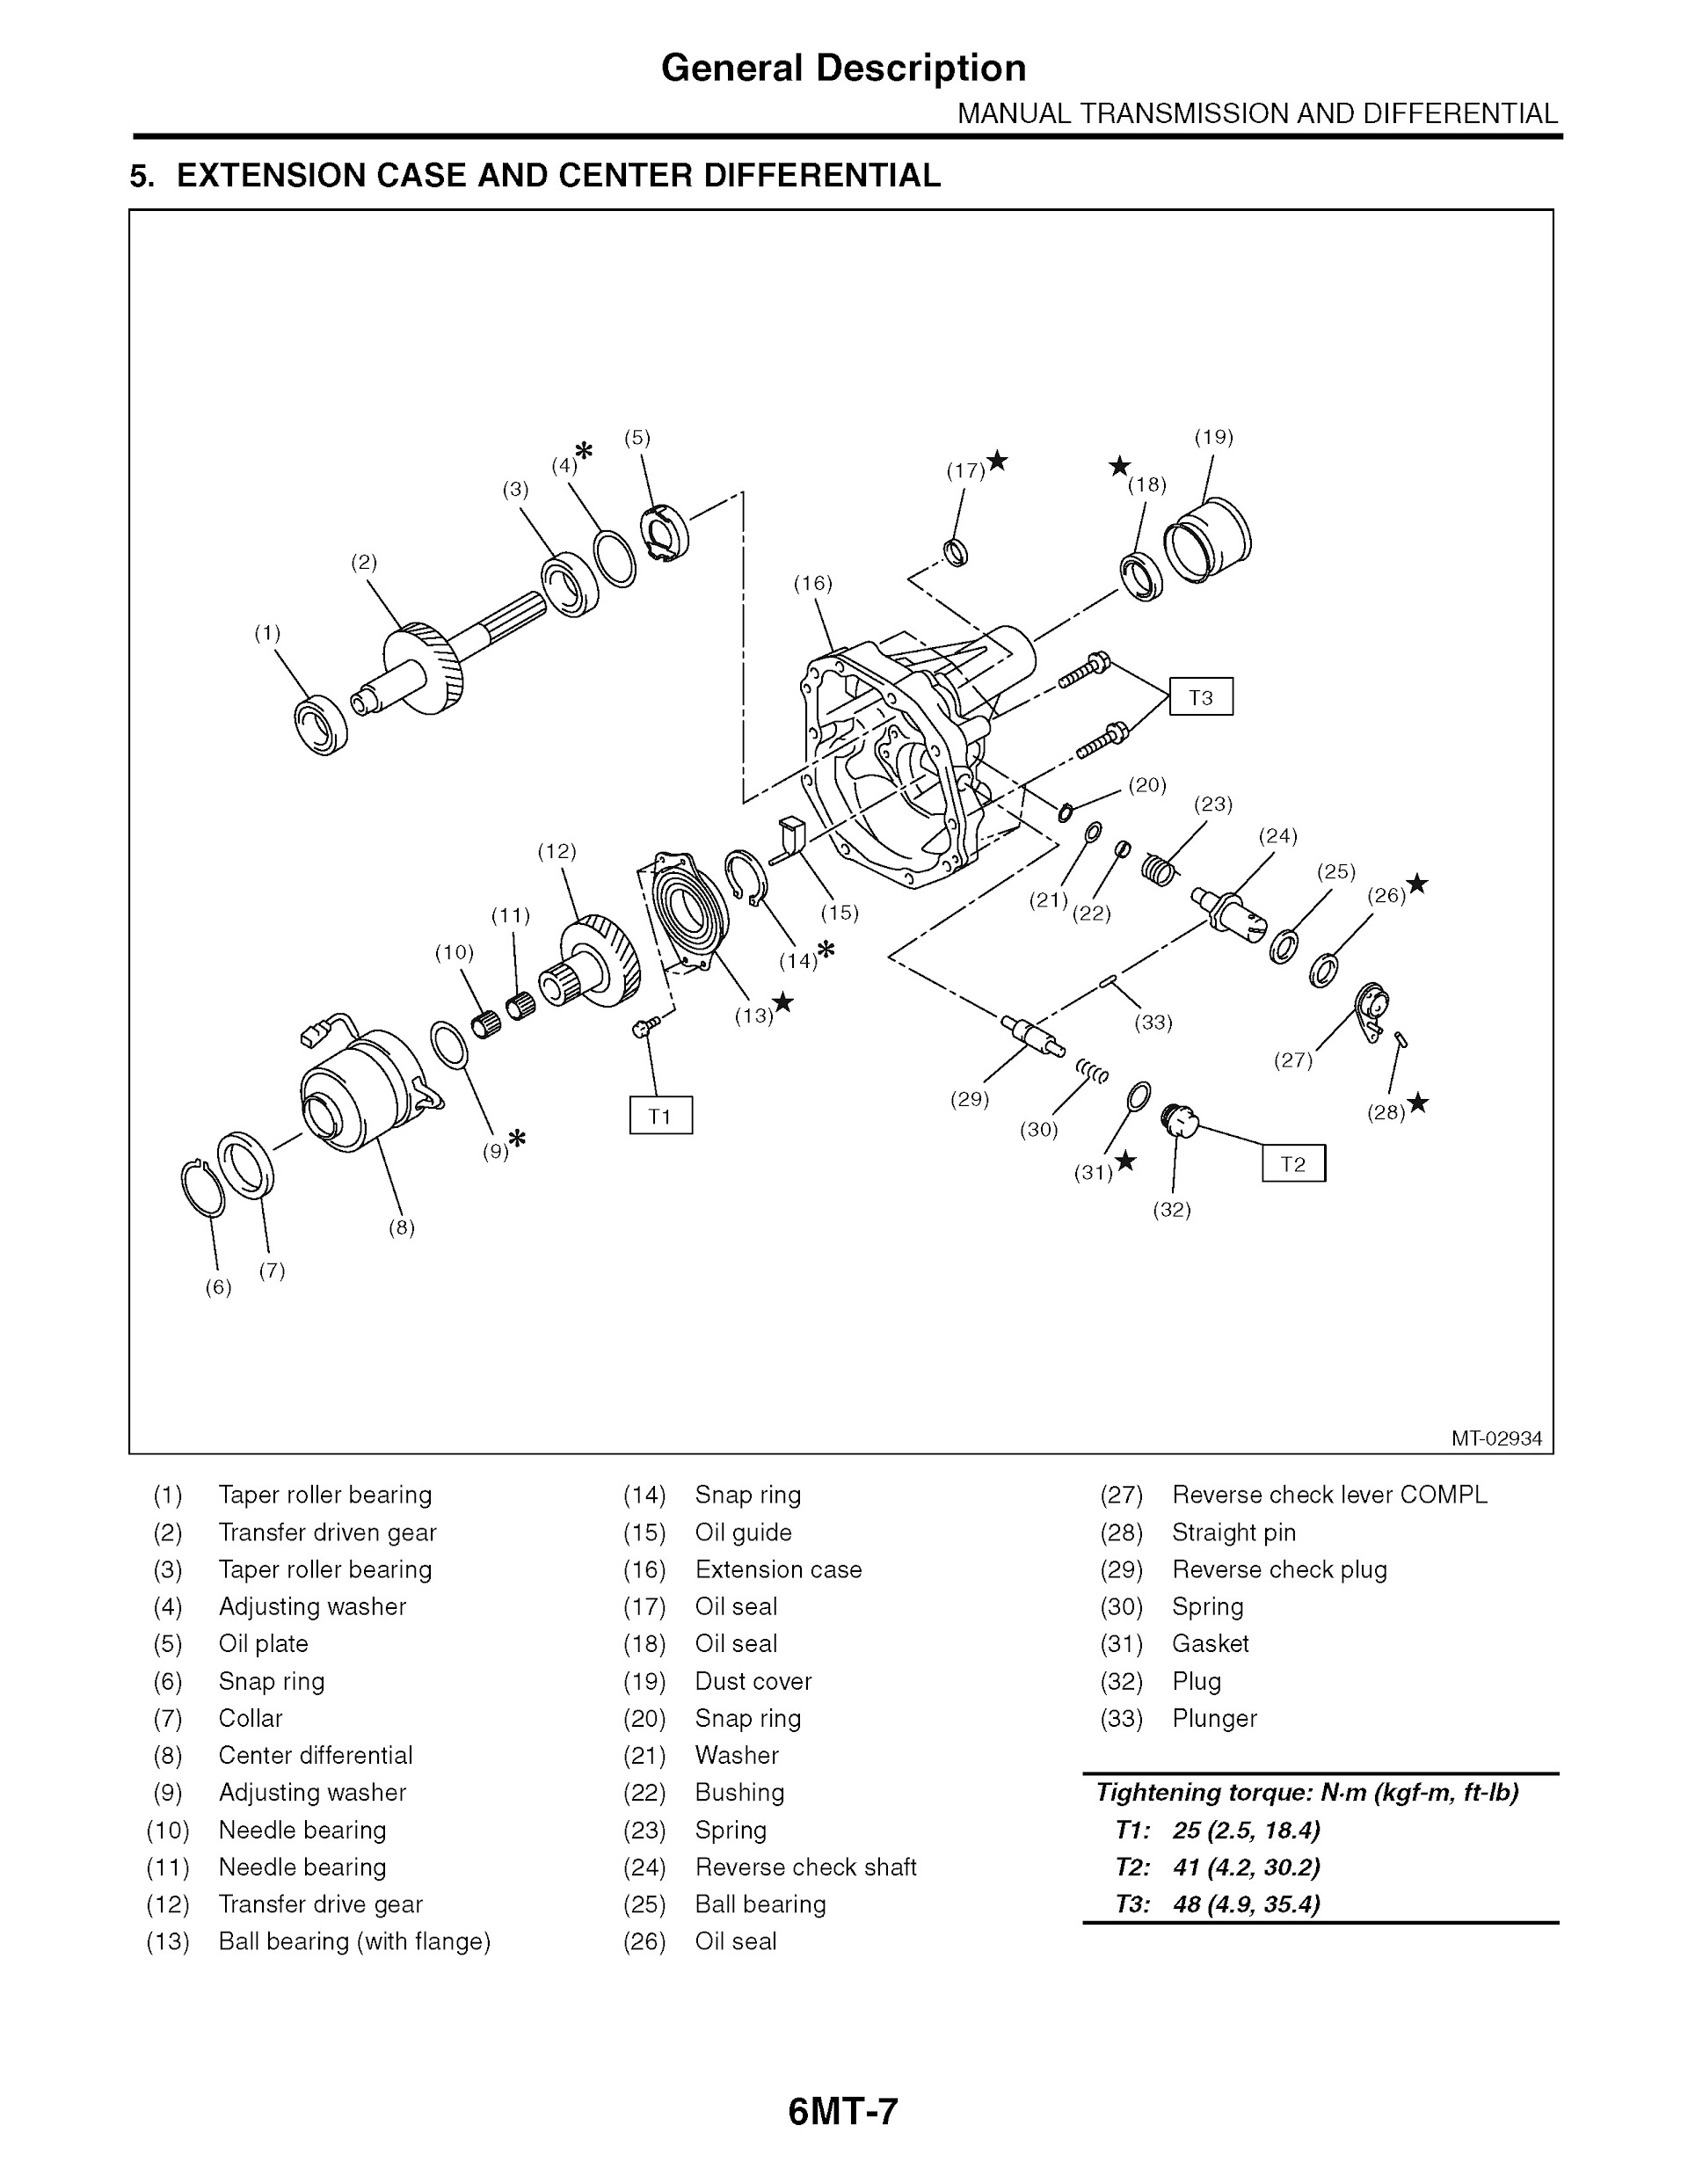 2014 Subaru Impreza WRX and WRX STI, Manual Transmission and Differential